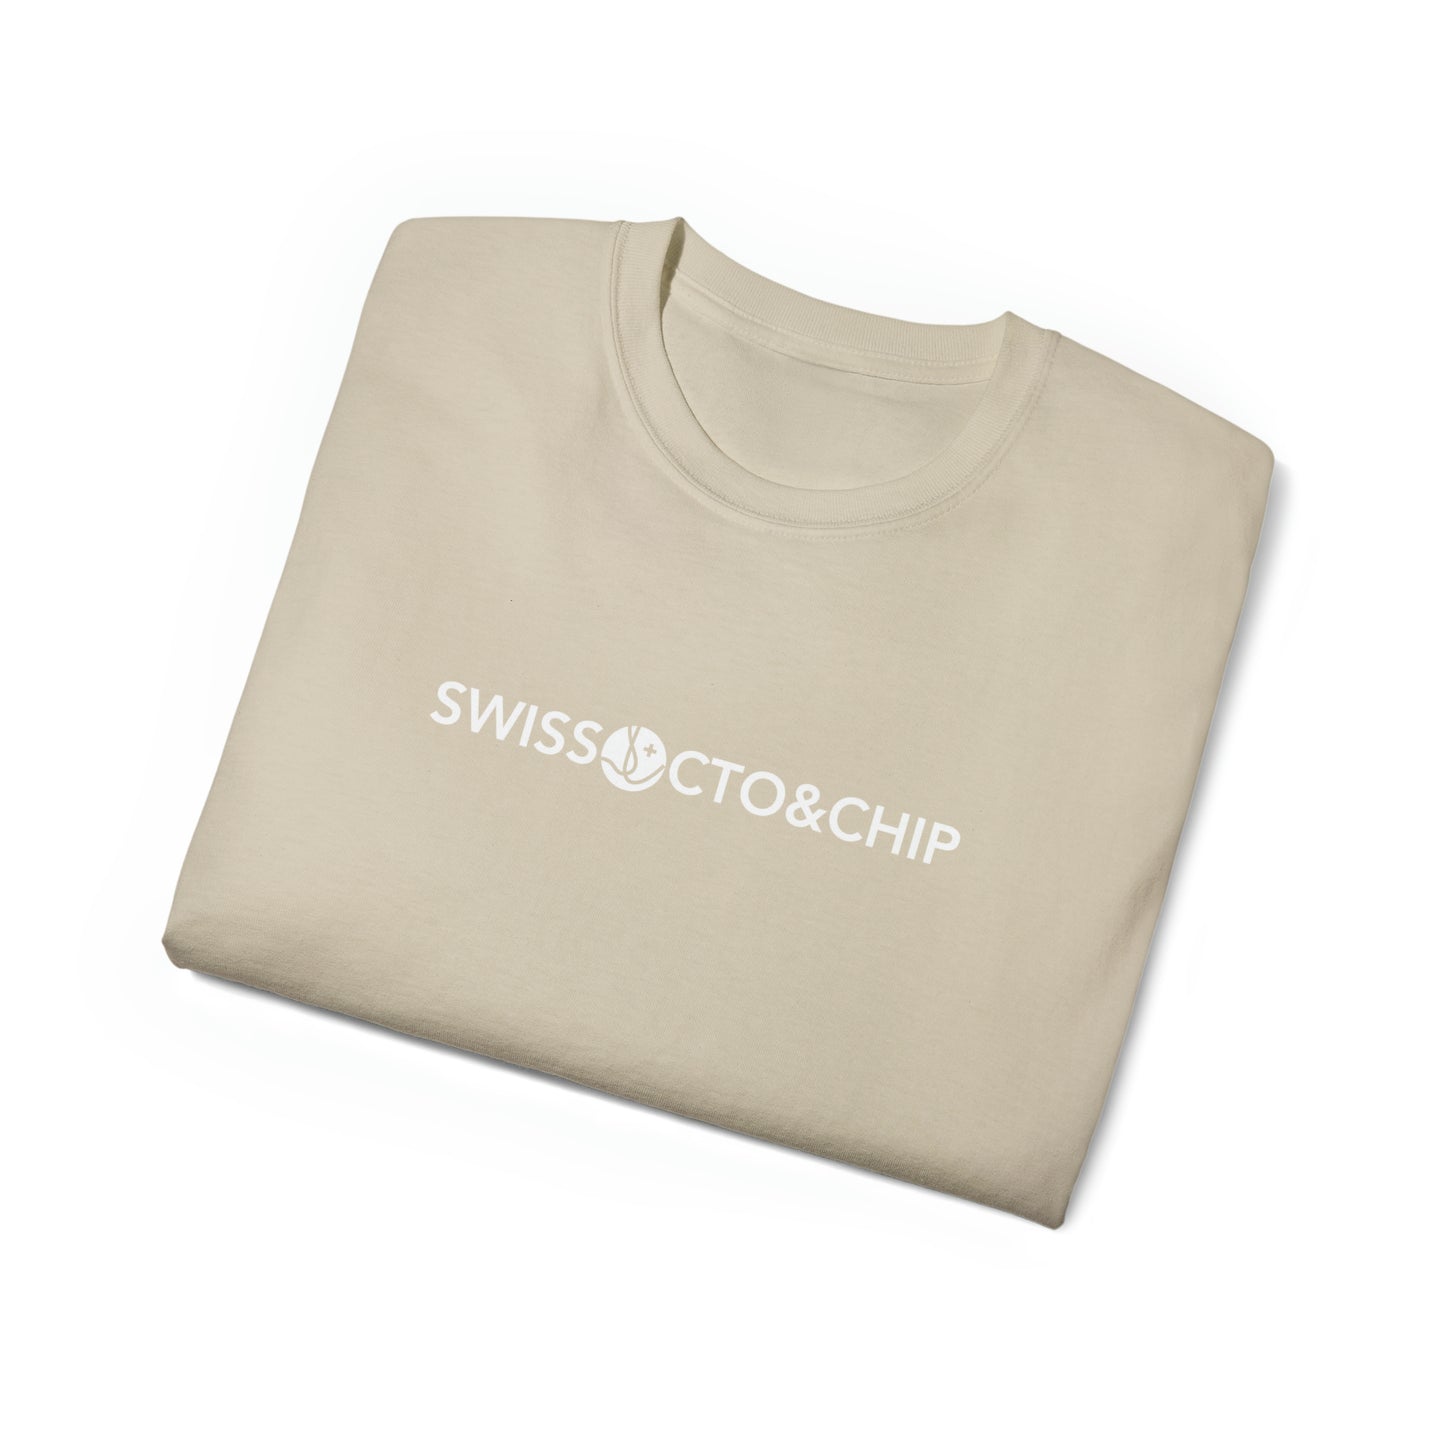 SwissCTO&CHIP Logo